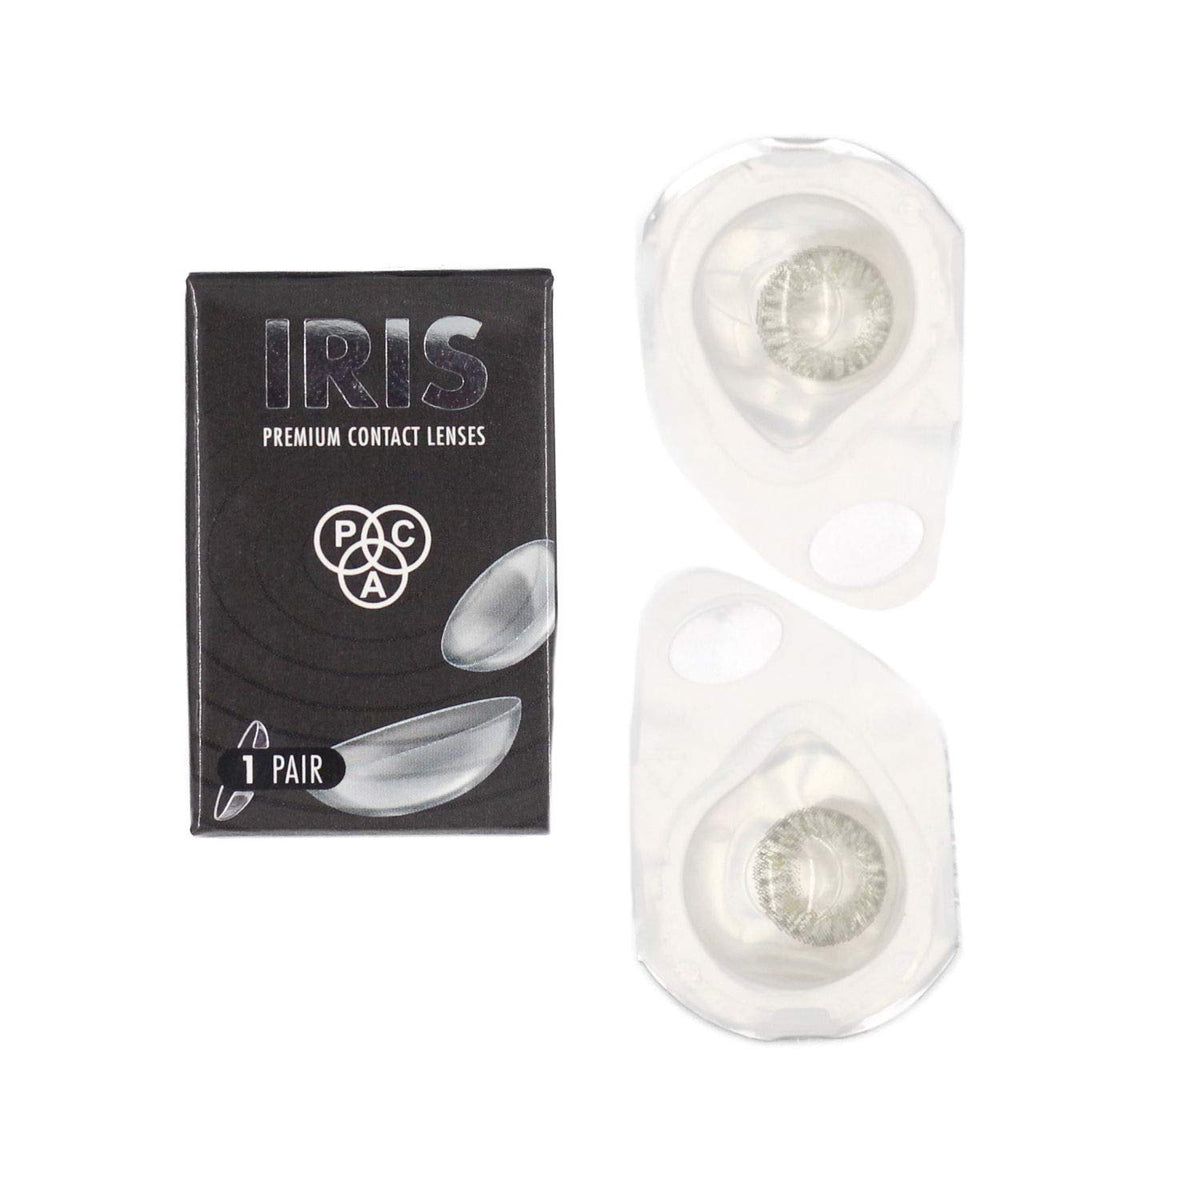 PAC IRIS Contact Lenses - Grey (1 Pair) PAC